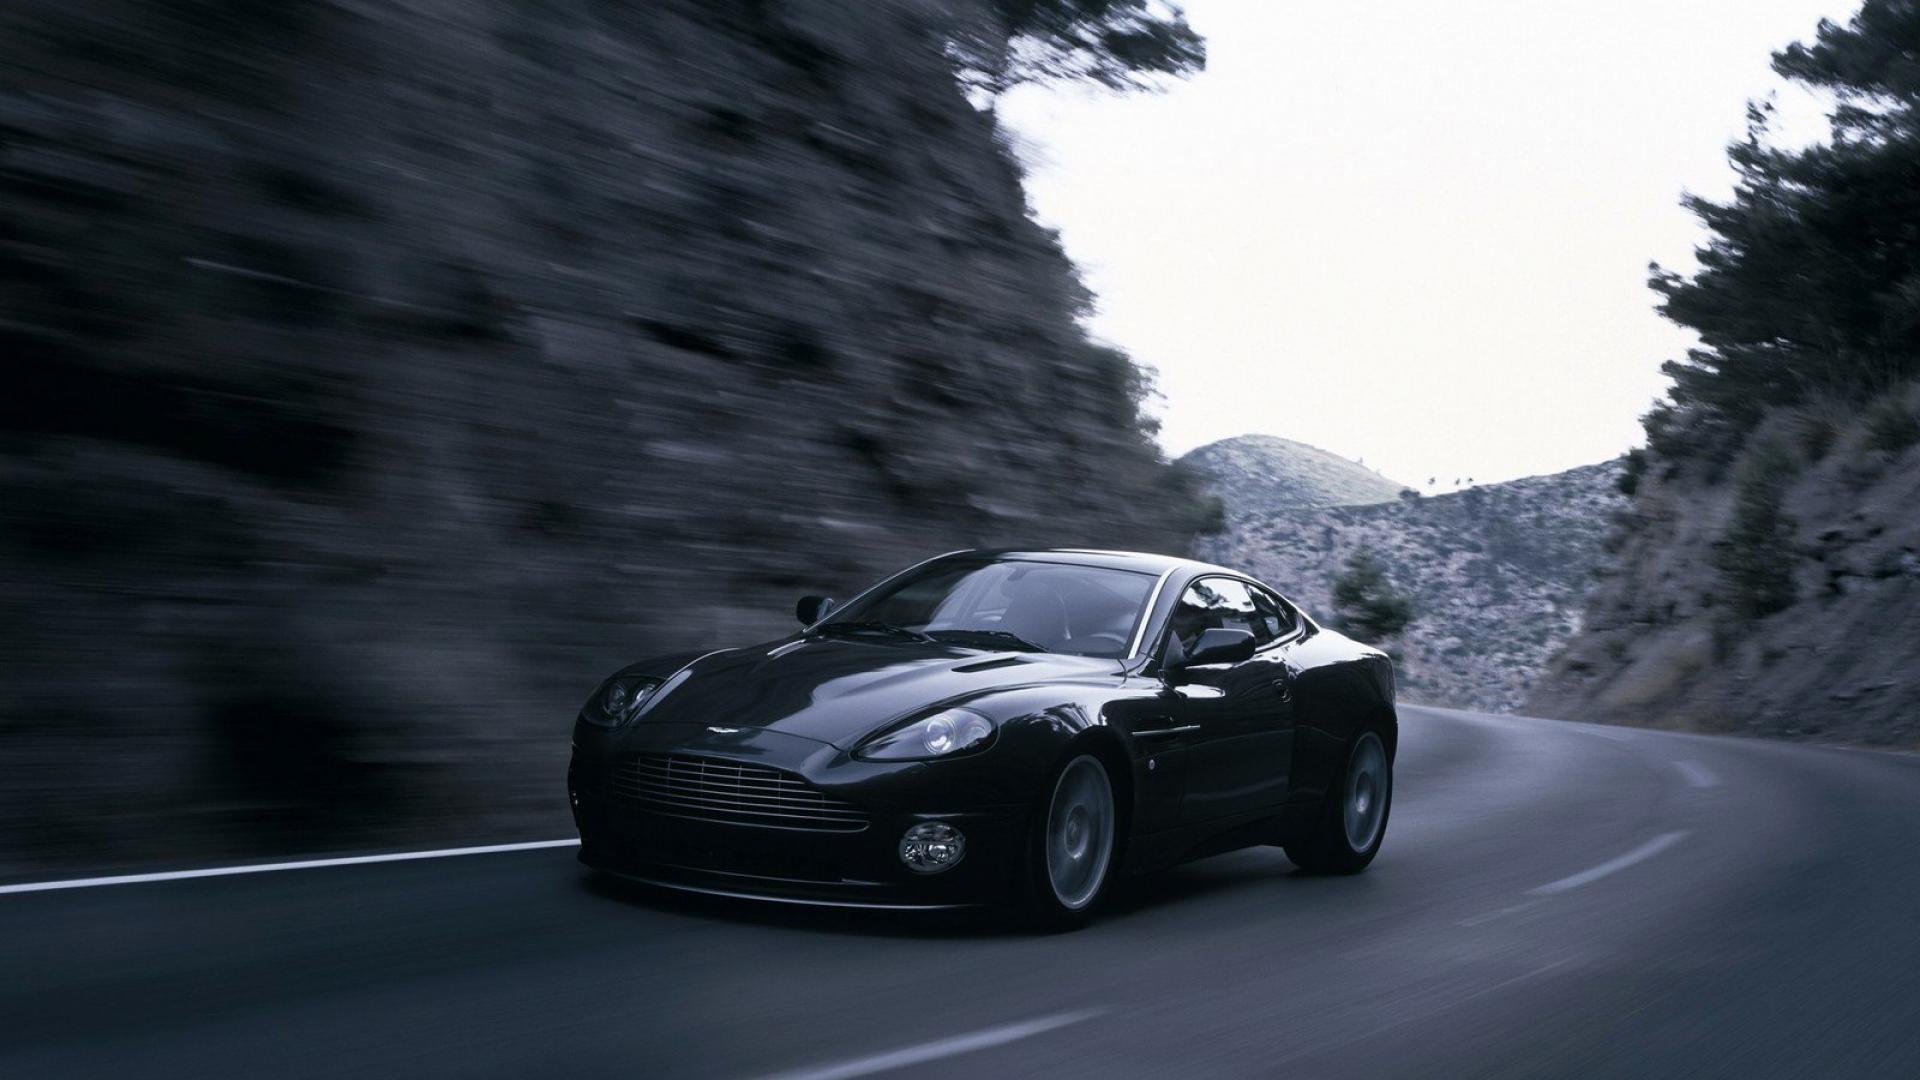 image For > Aston Martin Vanquish Wallpaper Widescreen